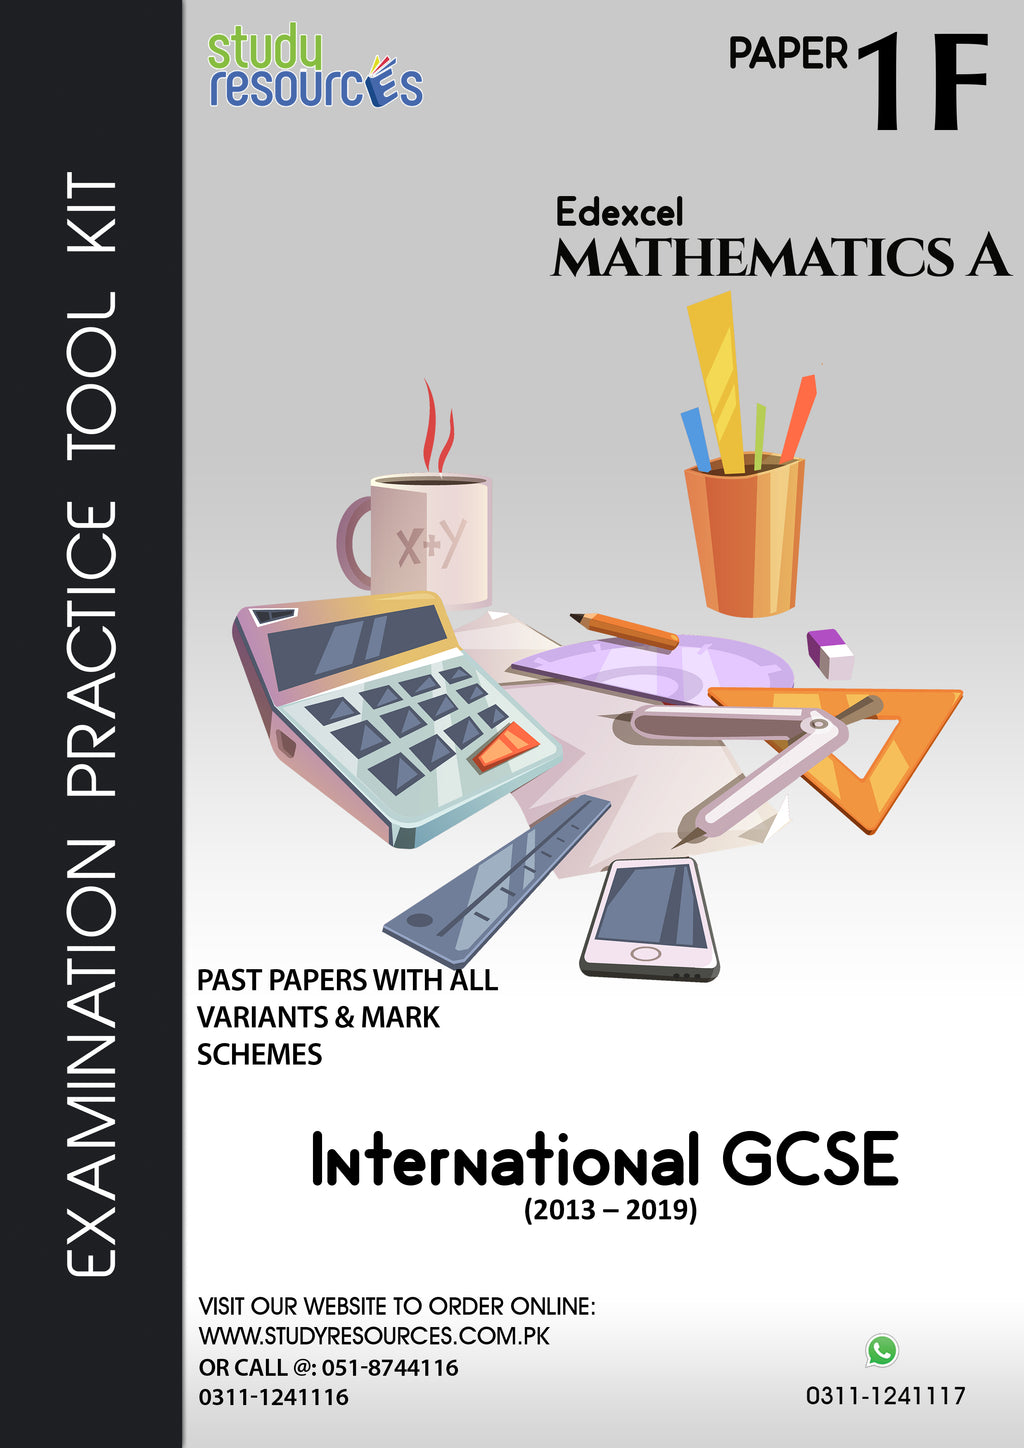 Edexcel IGCSE Mathematics "A" Paper-1F Past Papers (2013-2019)